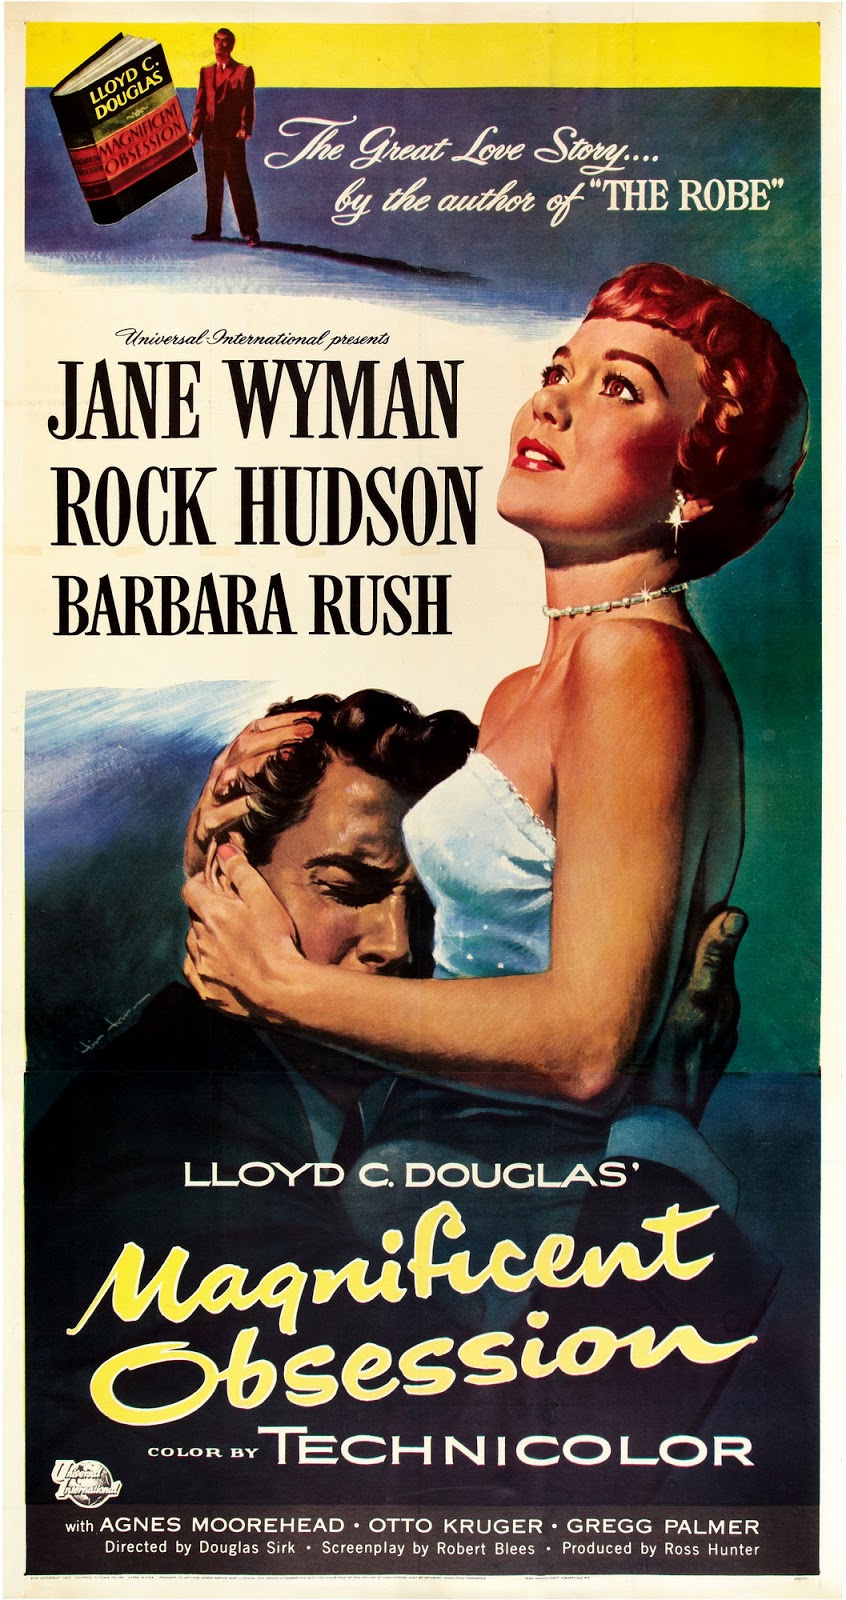 Magnificent obsession Jane Wyman Rock Hudson movie poster print 2 